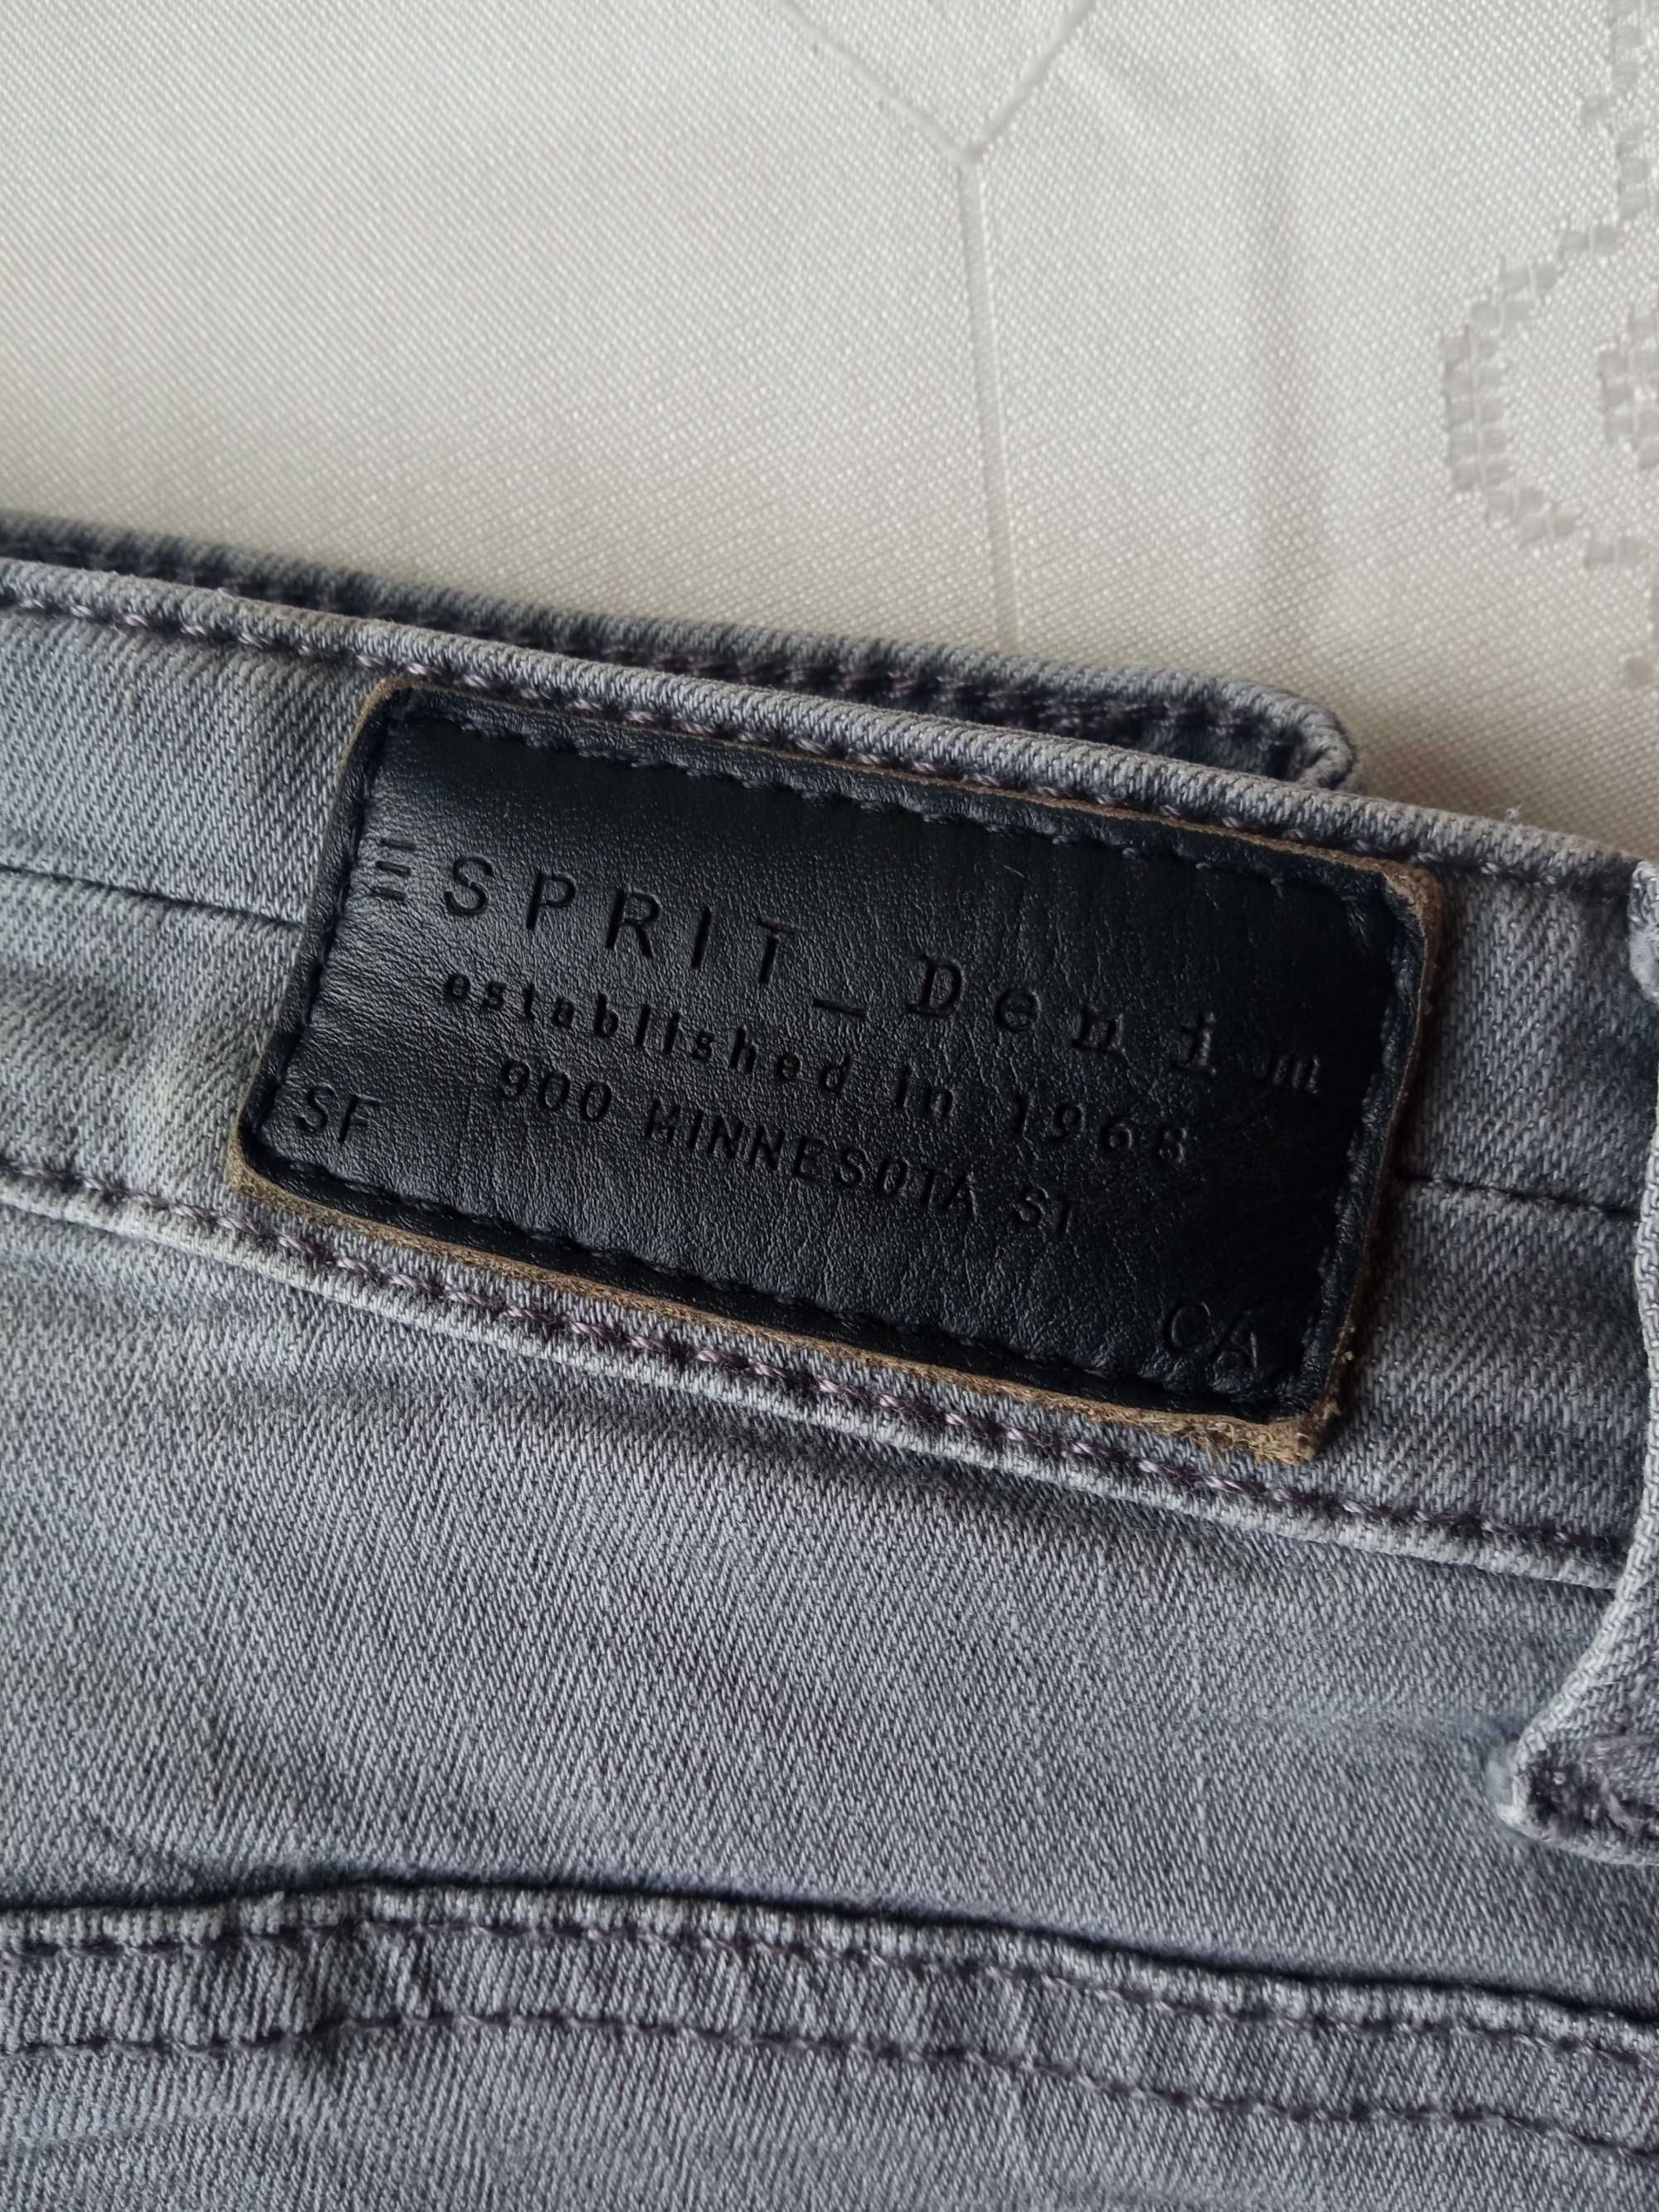 Esprit męskie spodnie jeans r 29-34 pas 78-84cm